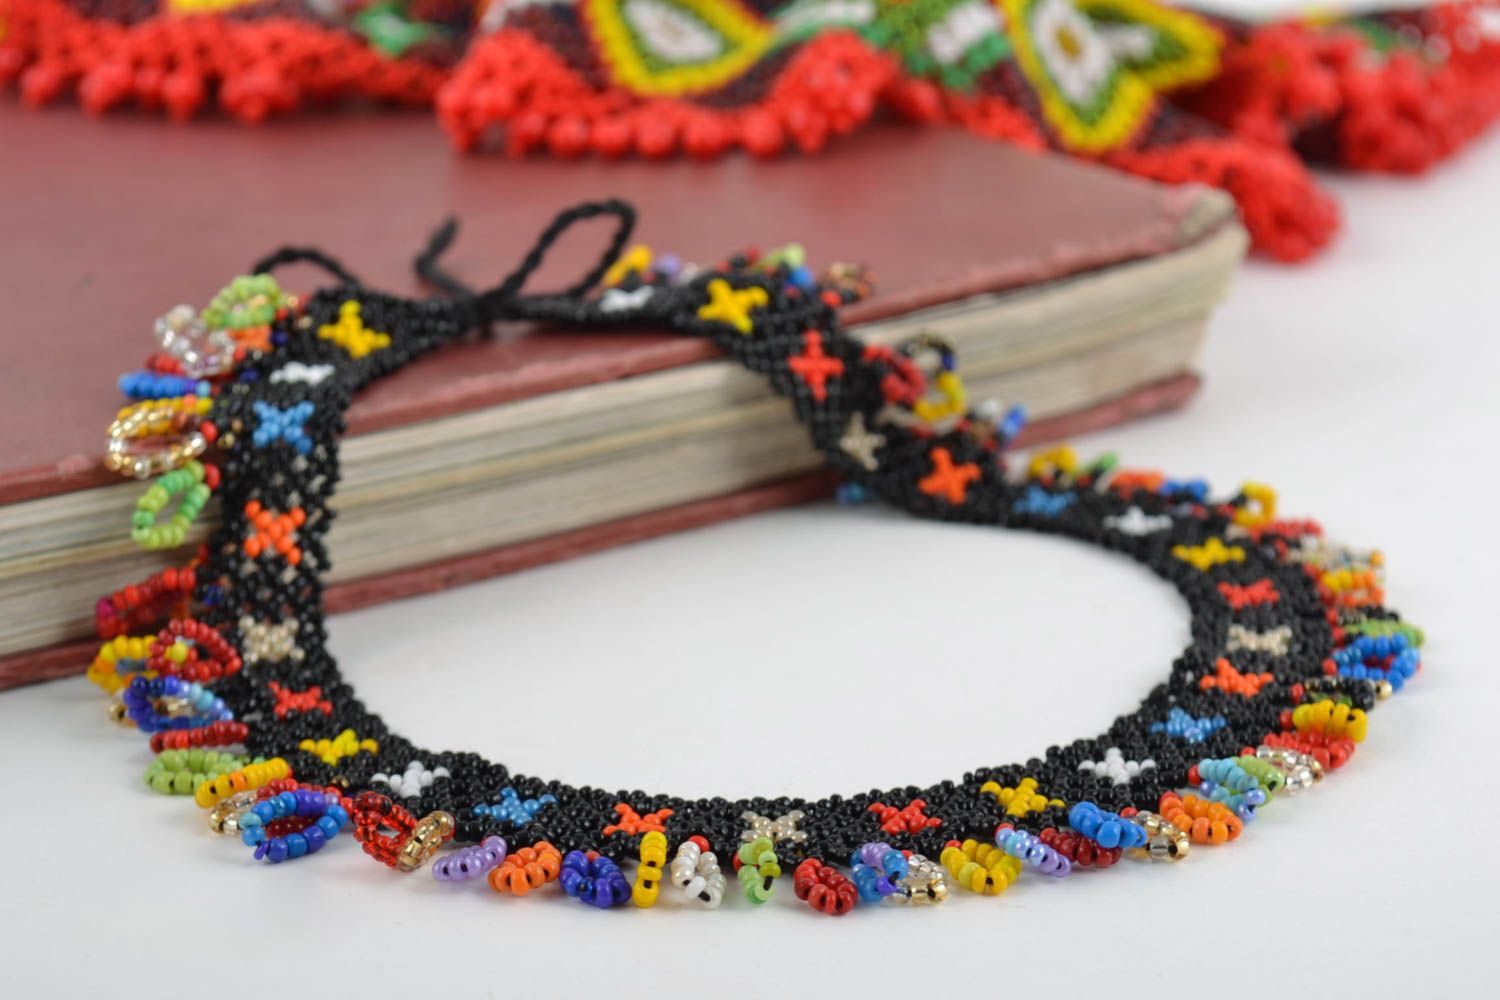 Handmade designer evening festive bead woven women's necklace ethnic jewelry photo 1